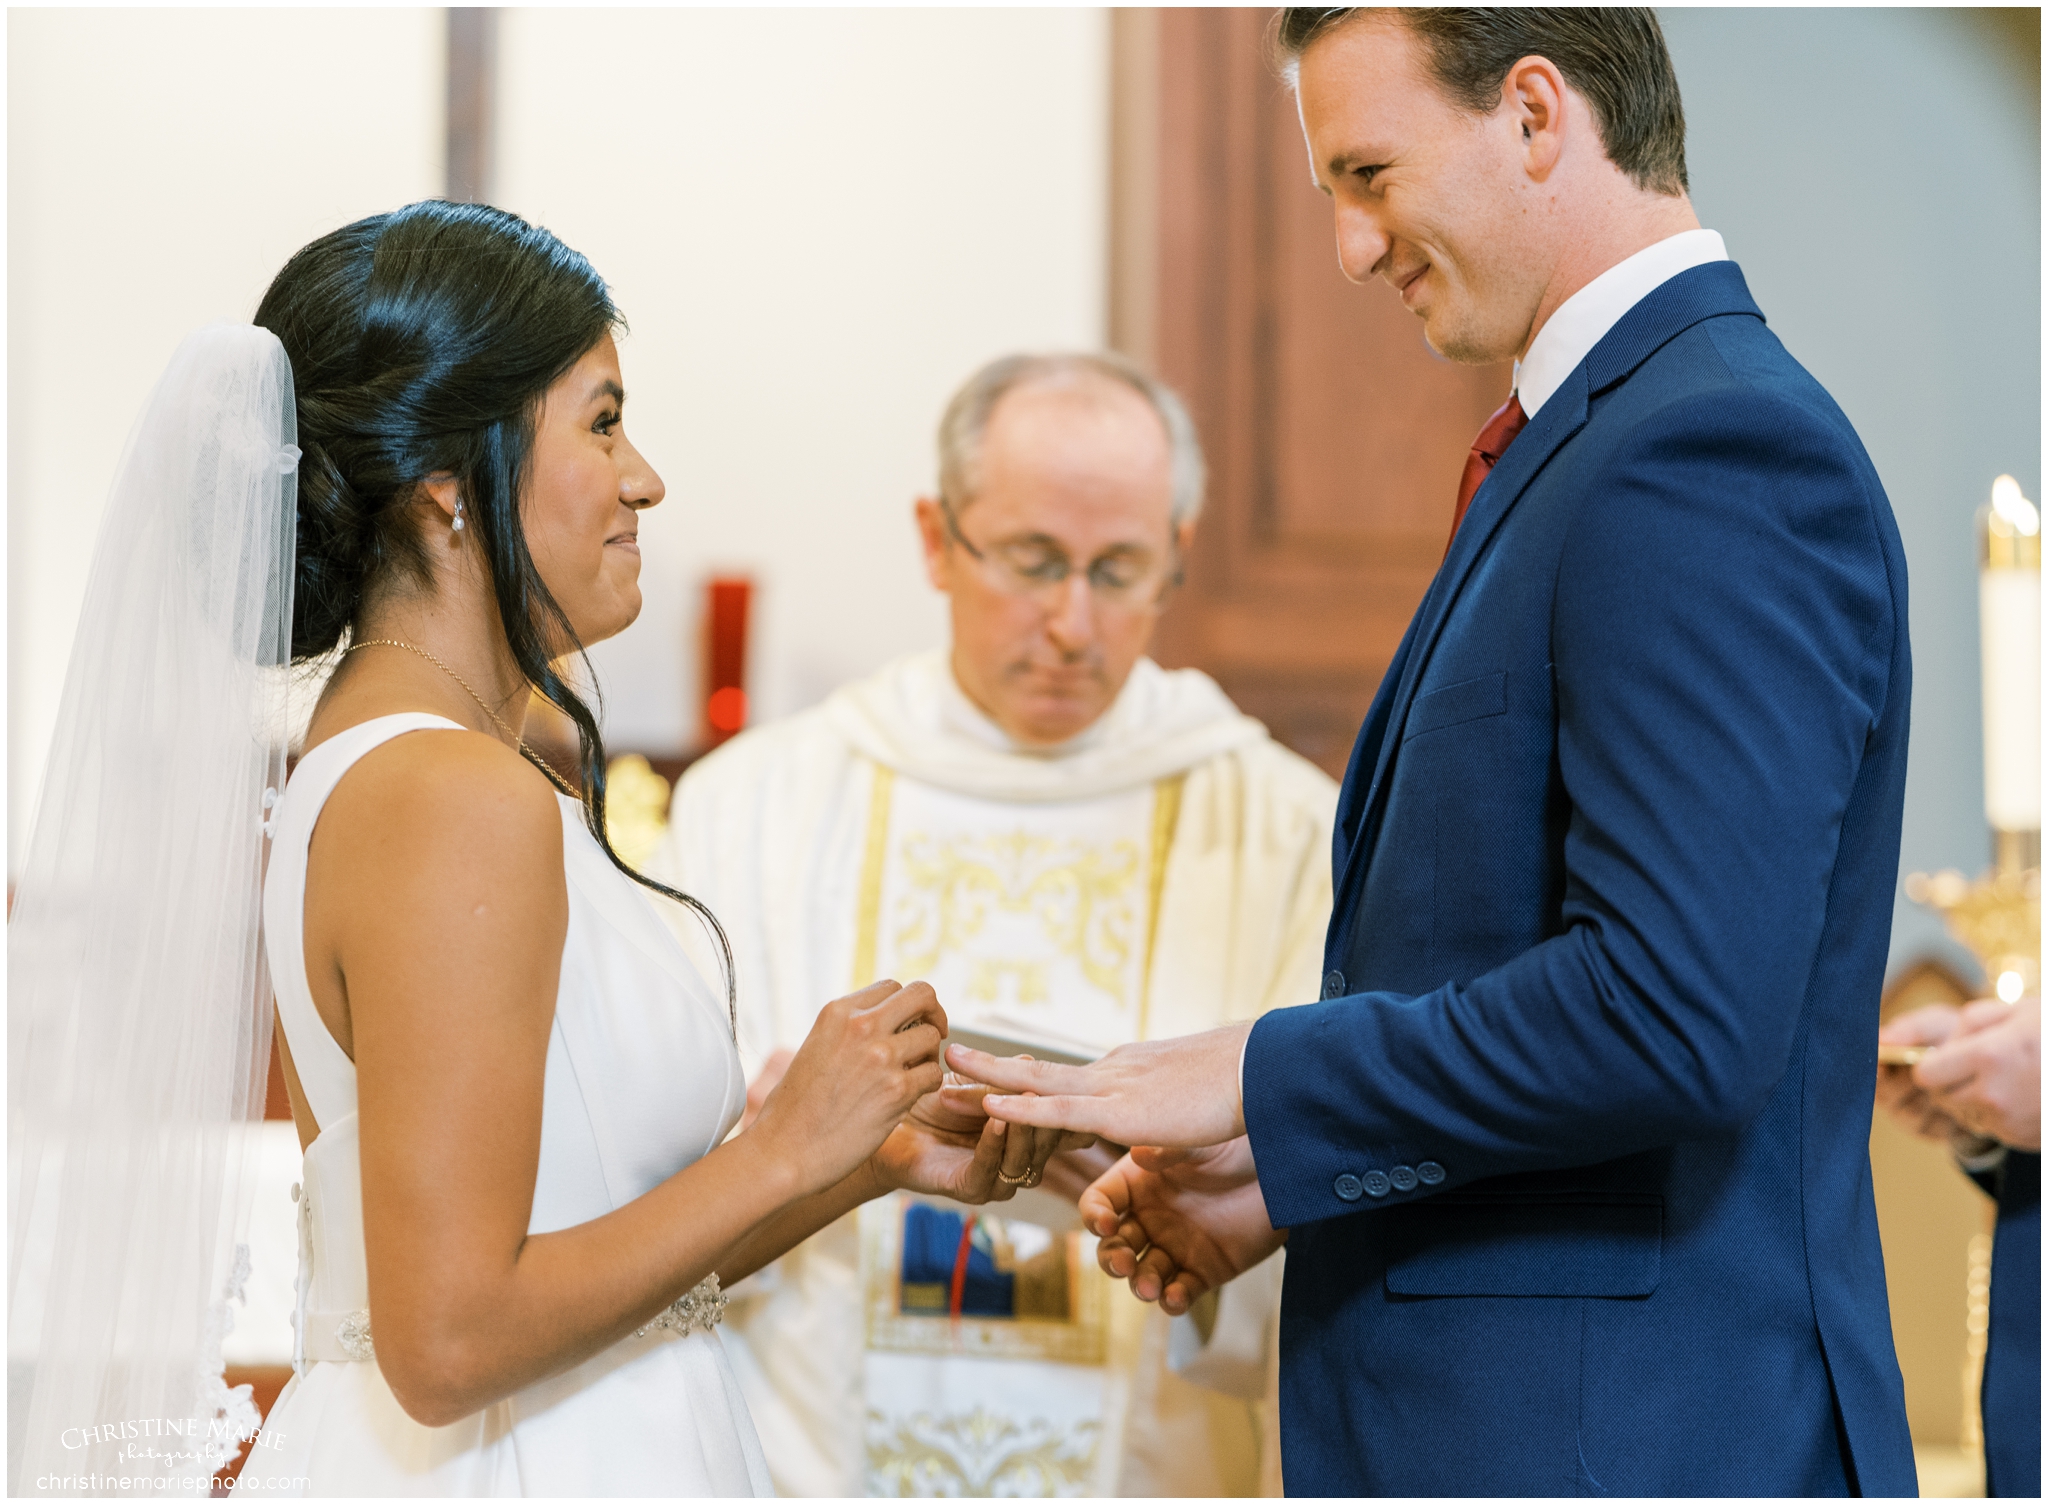 the exchange of rings in cumming ga wedding